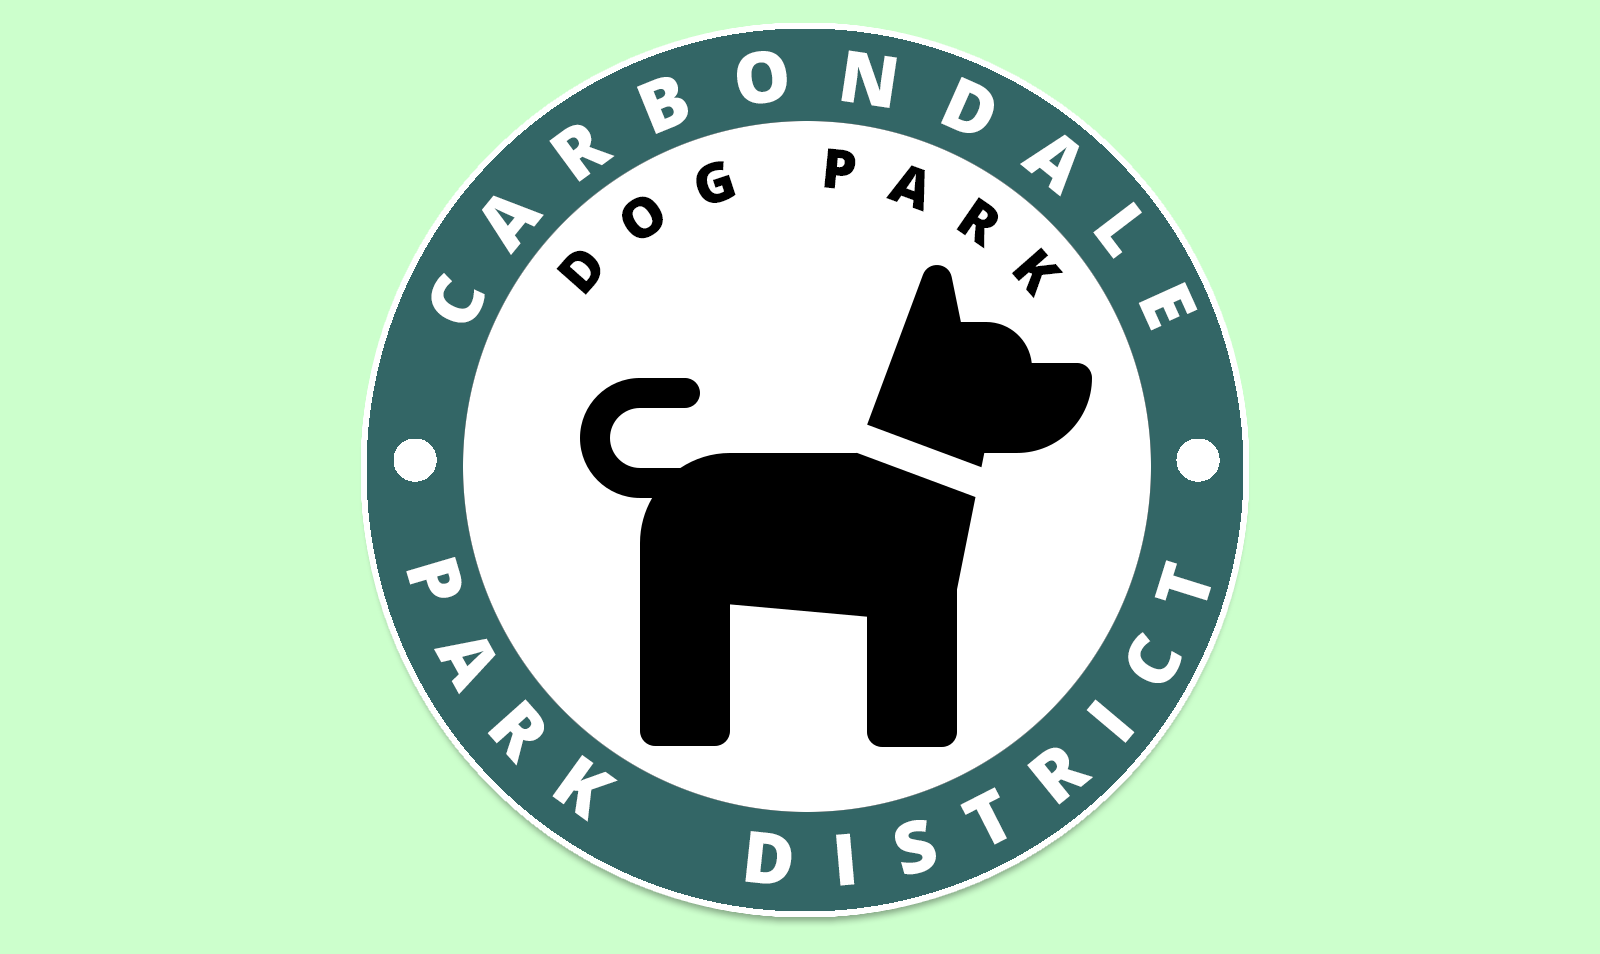 Petsafe Community dog park